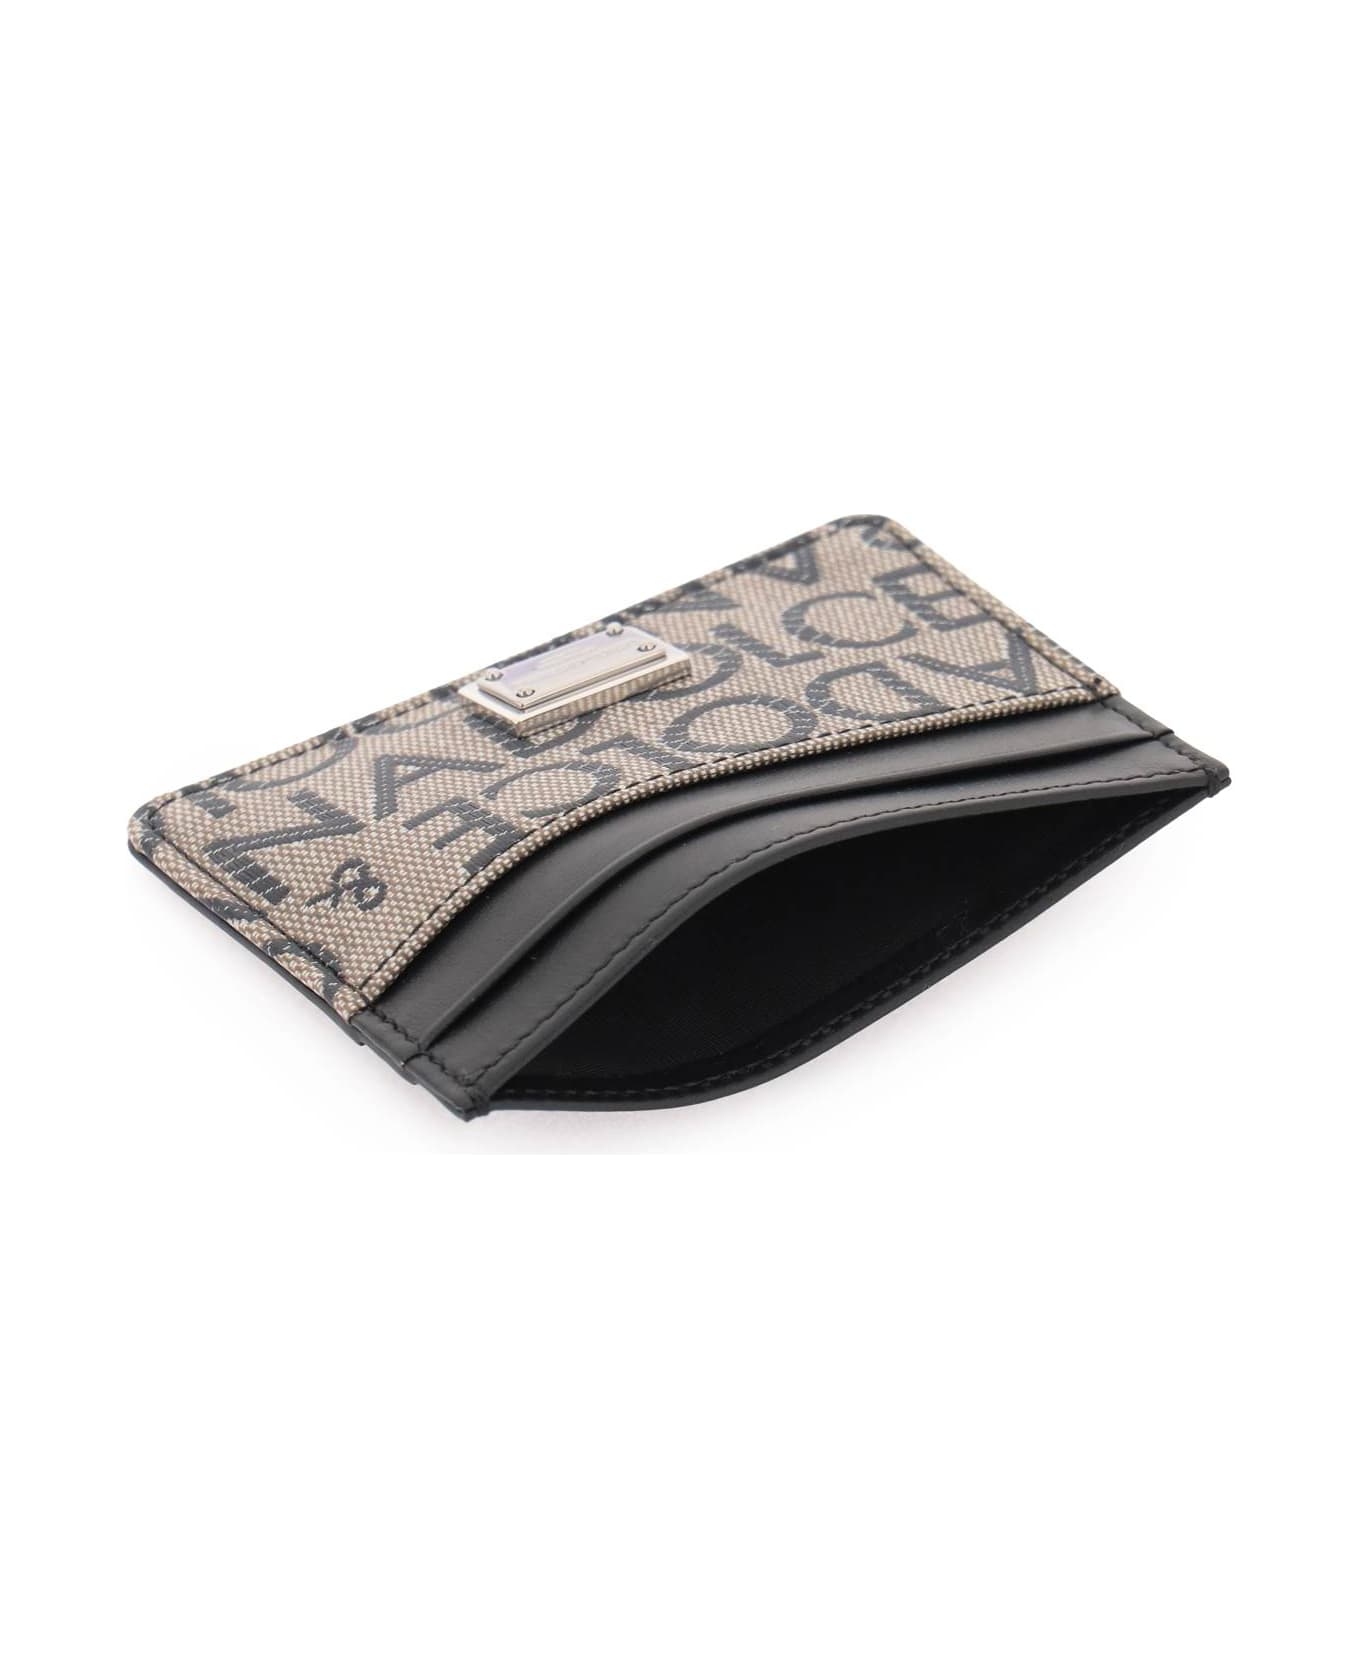 Dolce & Gabbana Leather Card Holder - Marrone/nero